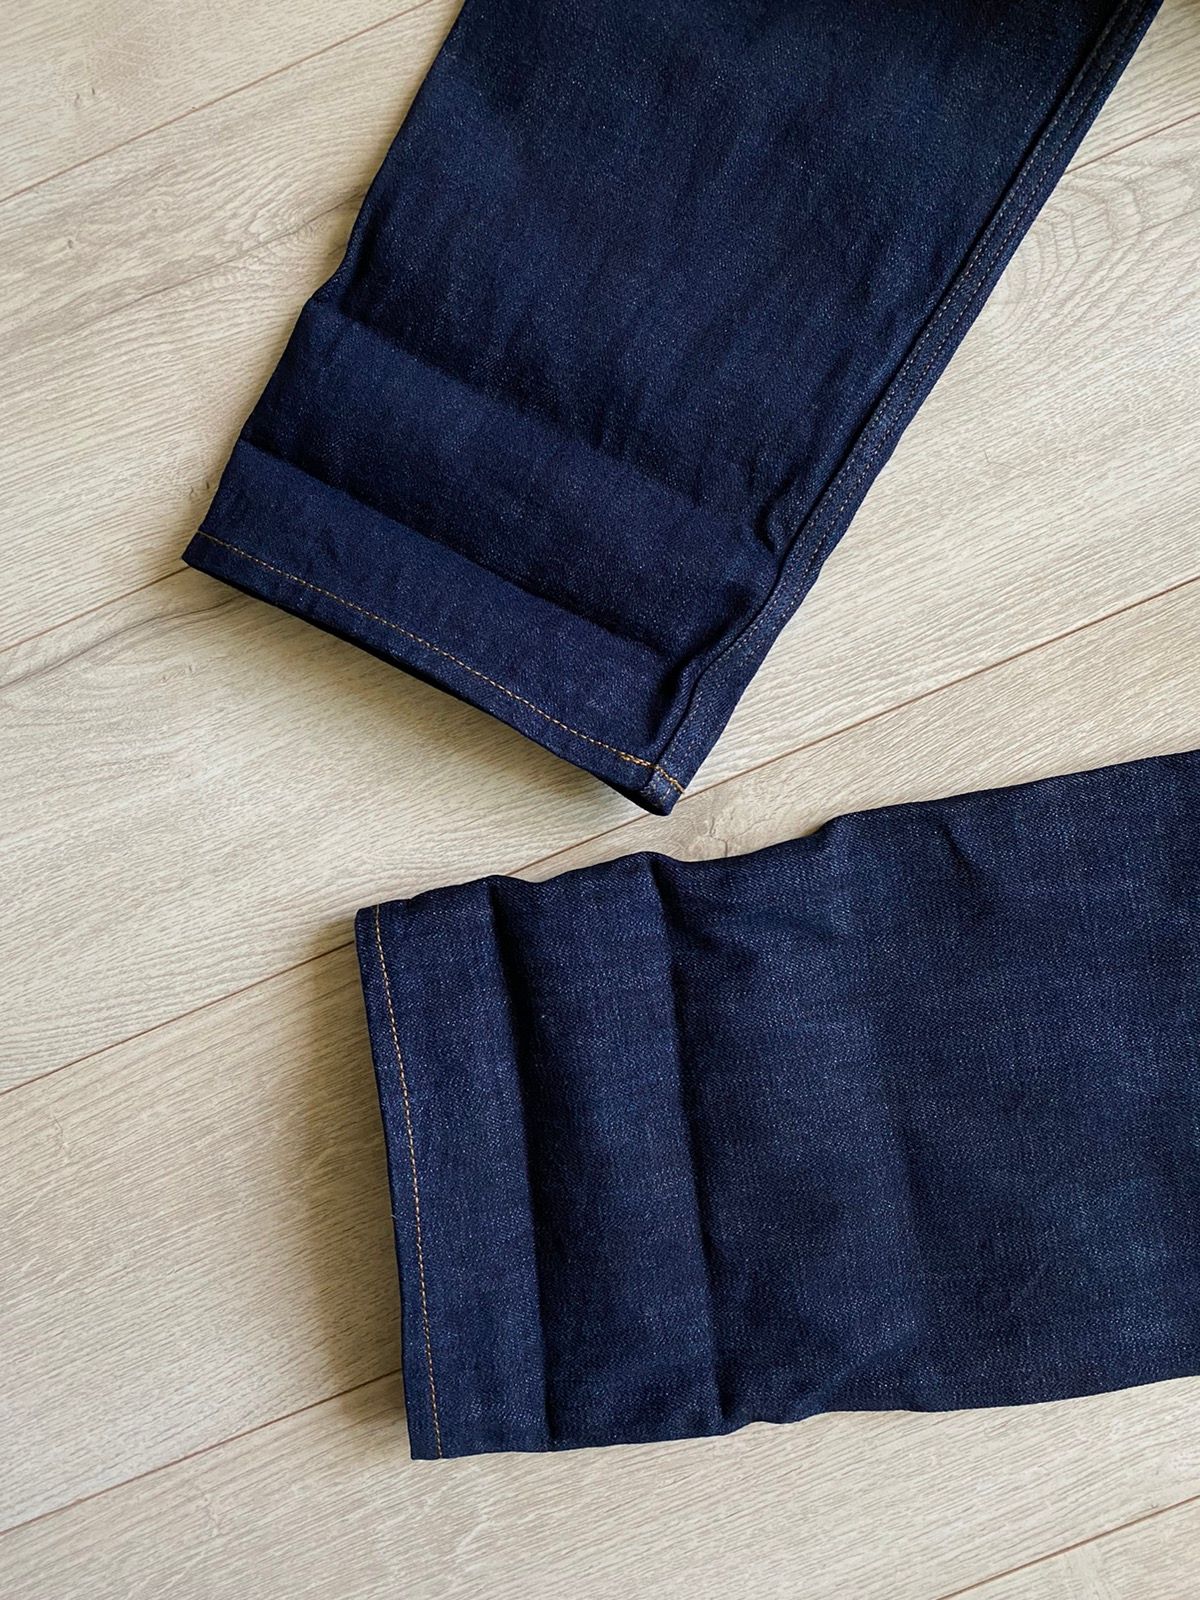 Italian Designers Hens Teeth jeans selvedge Italian denim original 14,3 Oz Size US 36 / EU 52 - 12 Thumbnail